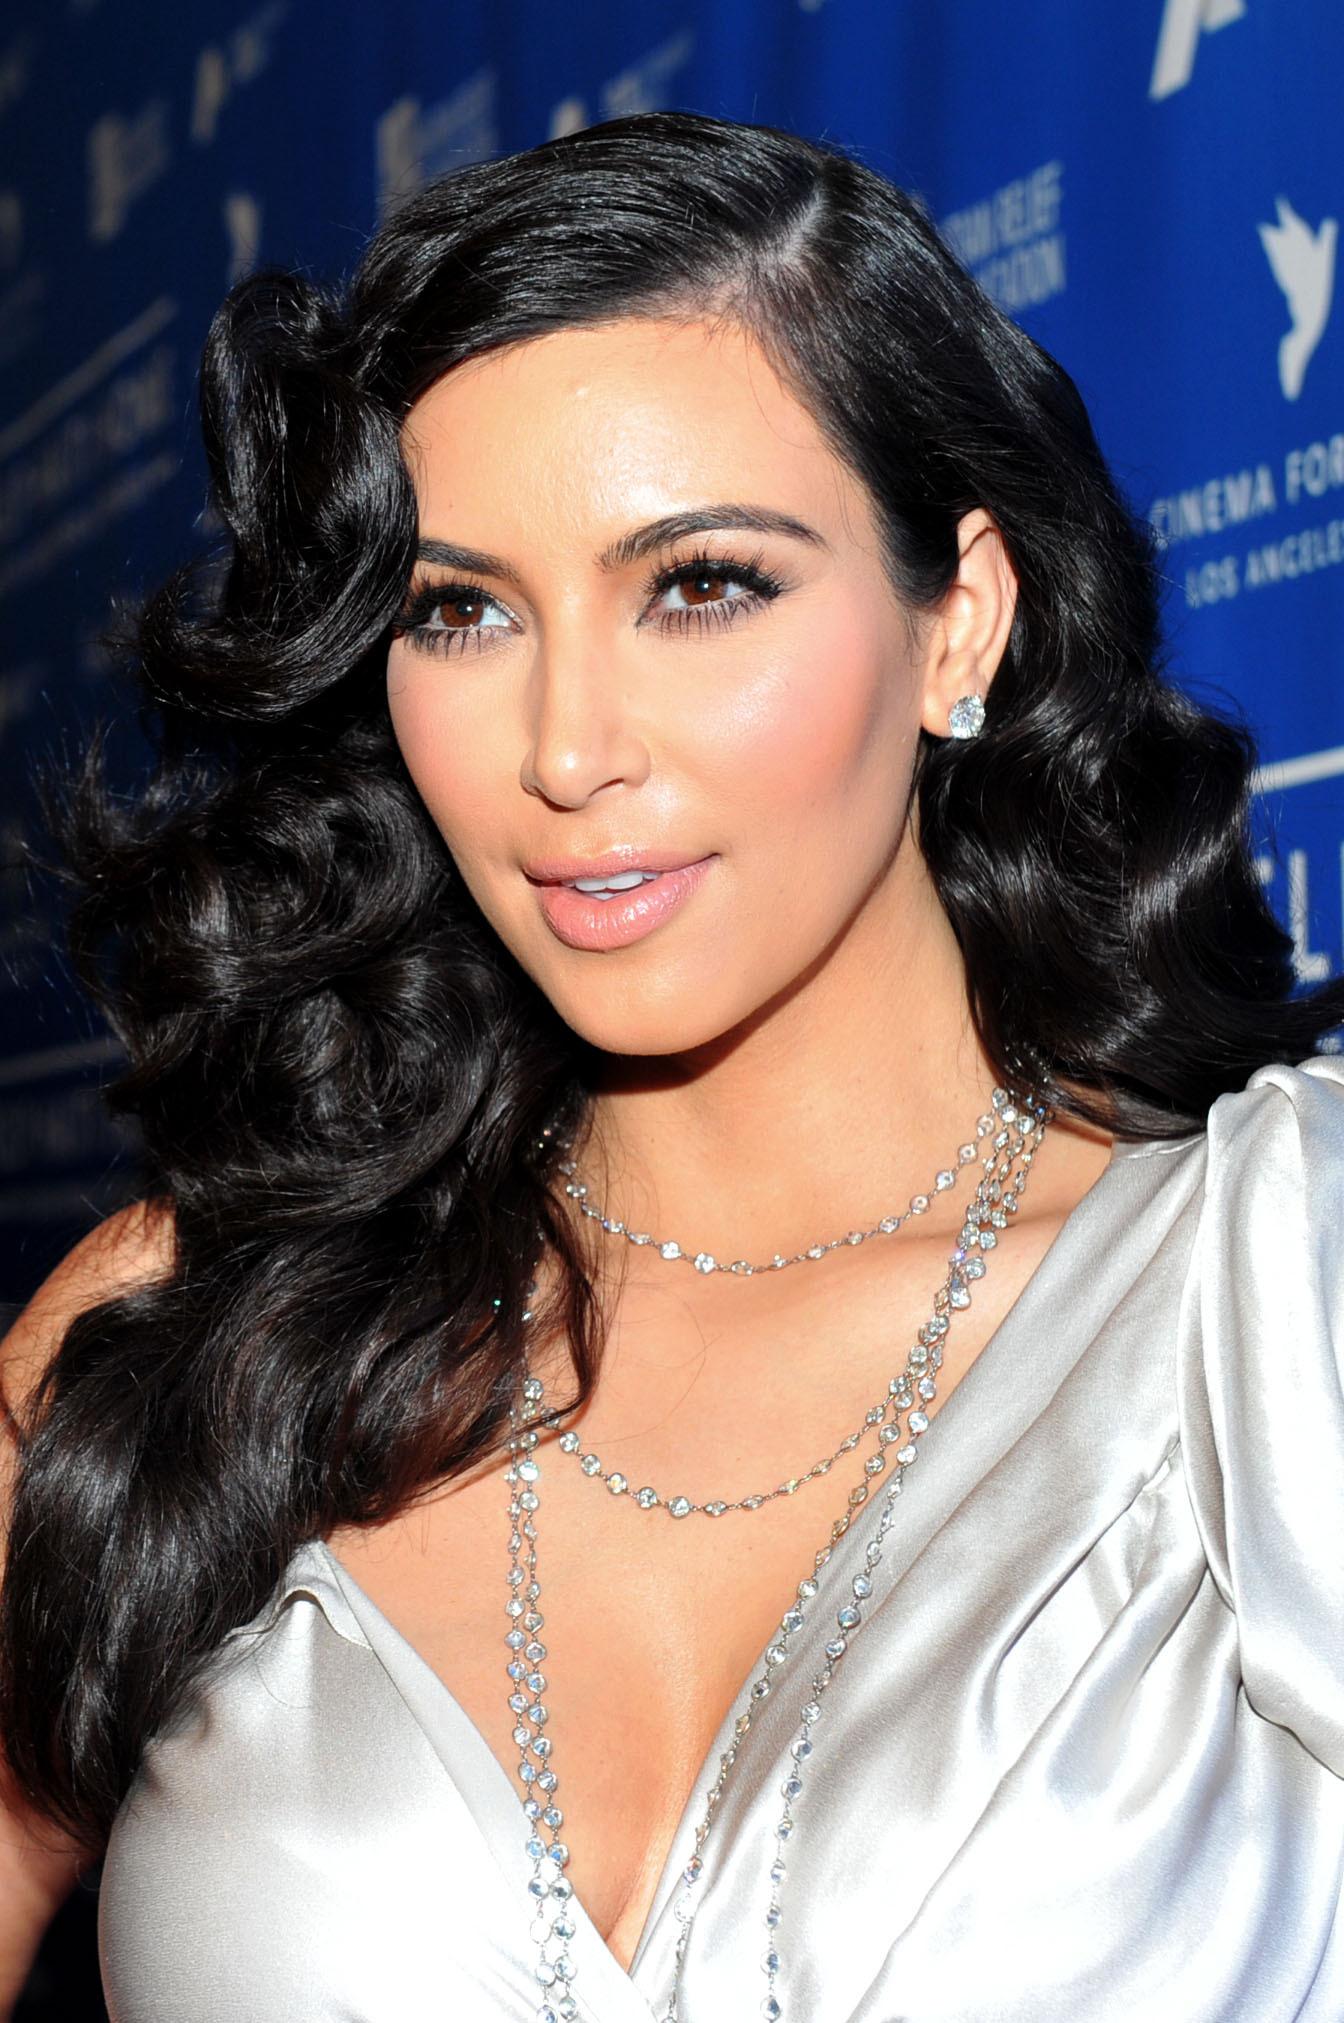 Kim Kardashian image